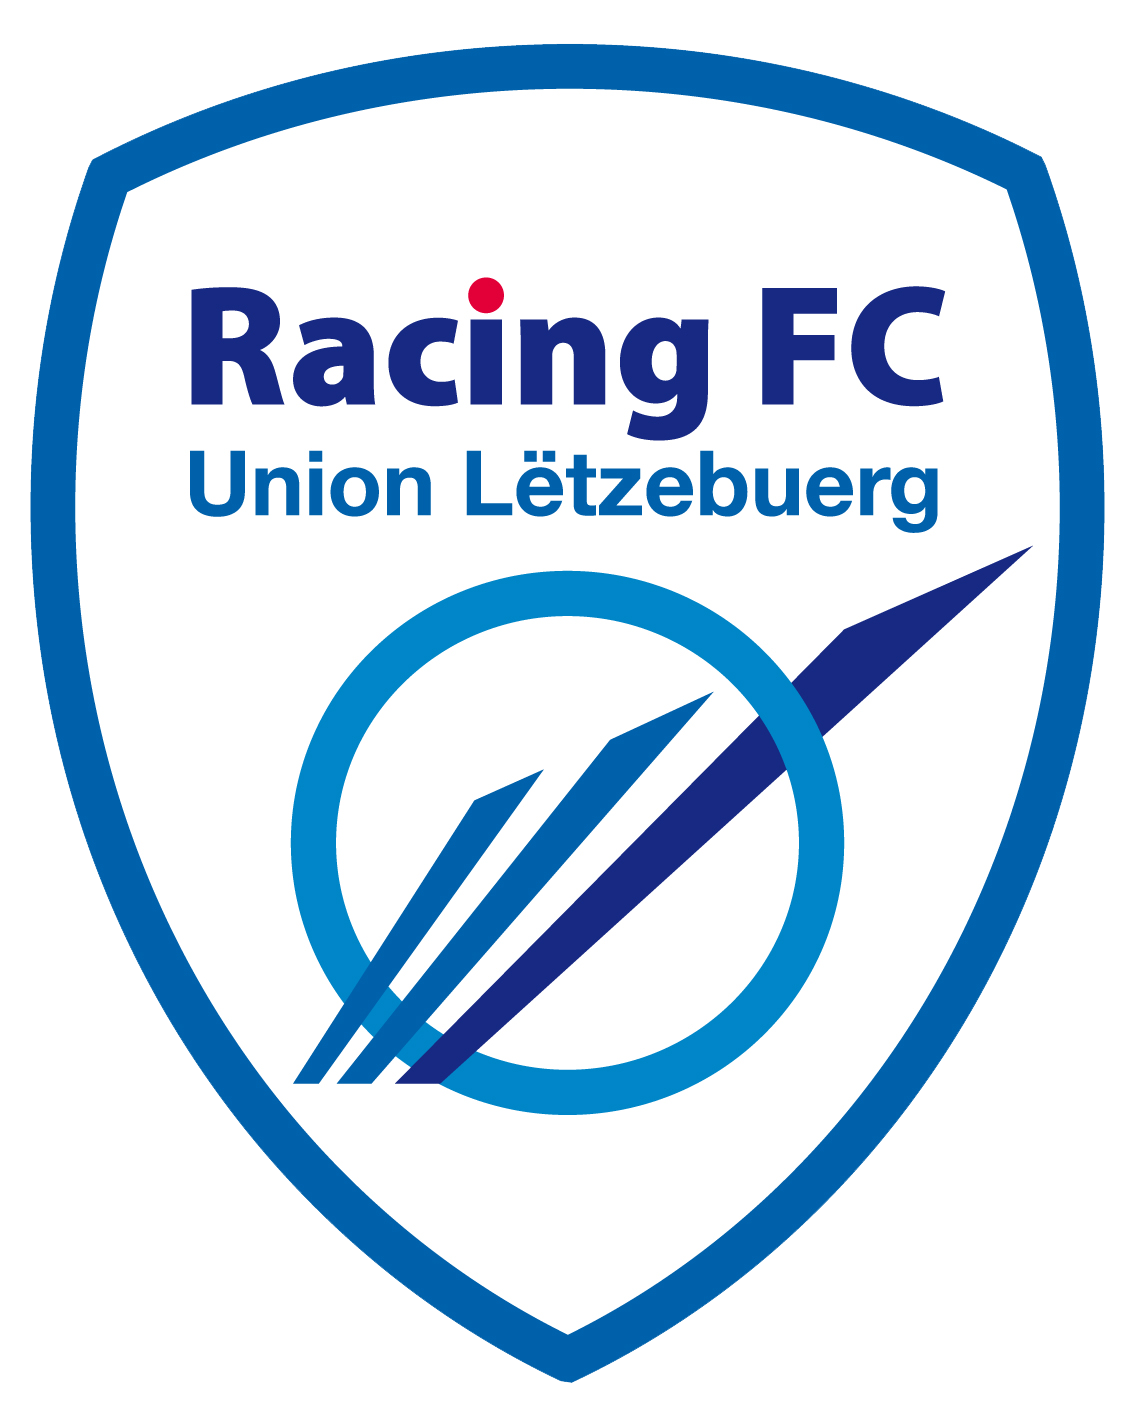 Racing FC Union kvinder